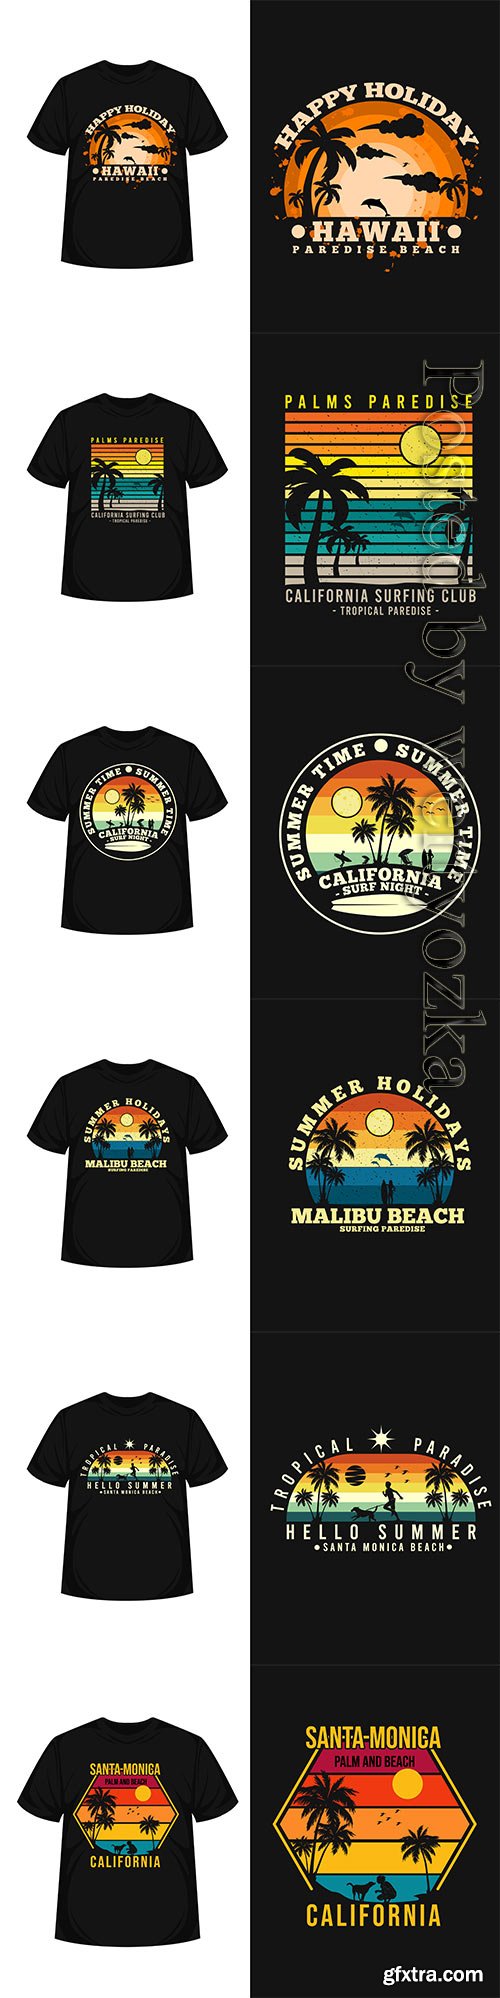 Summer paradise beach merchandise silhouette t shirt vector design